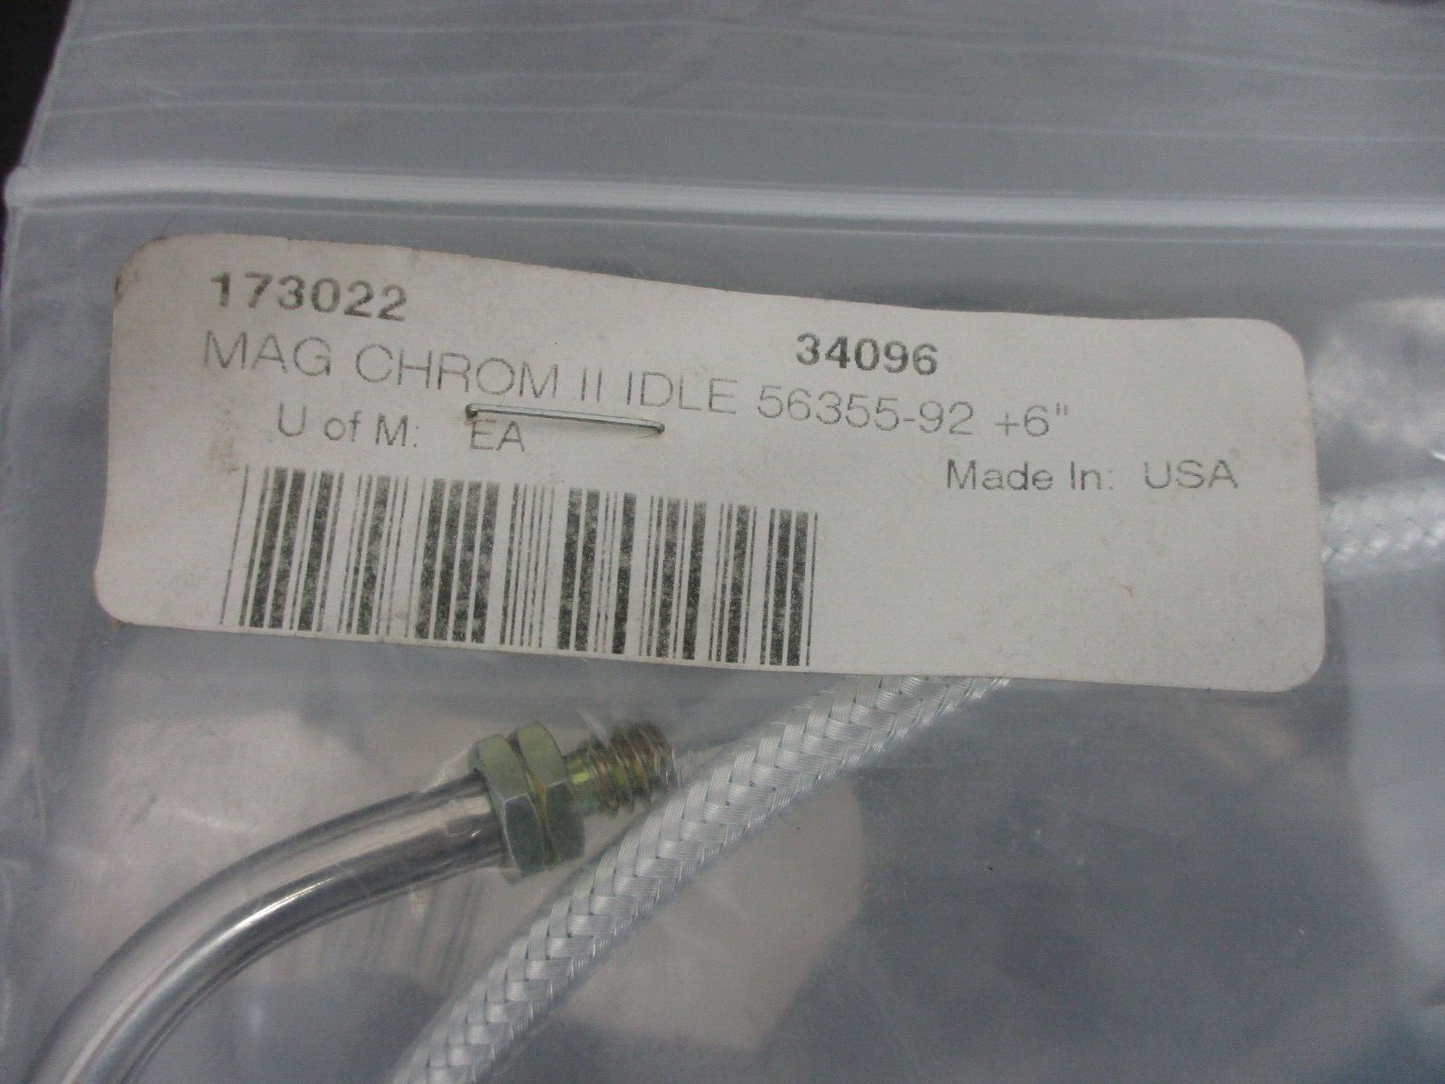 Magnum Chromite || Idle Cable +6'' 173022